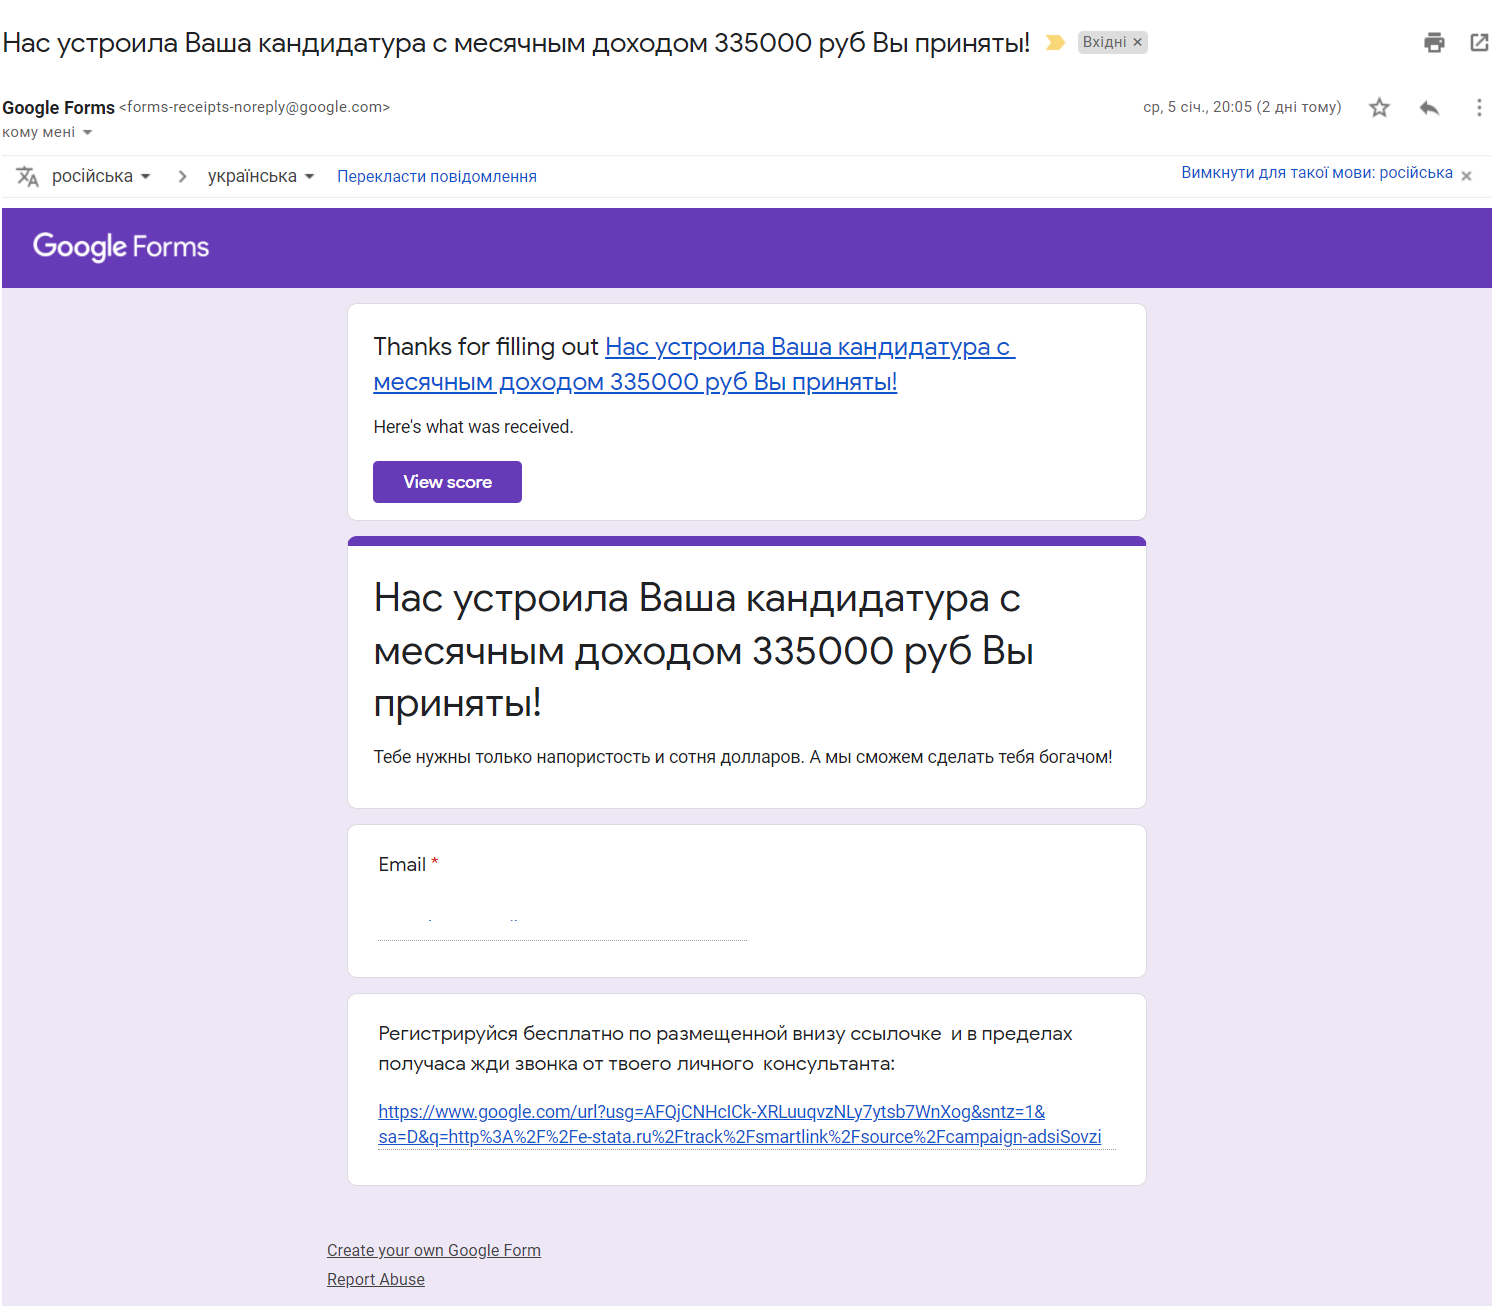 Nas ustroila Vasha kandidatura s mesyachnym dohodom 335000 rub Vy prinyaty nzarudnya gmail.com Gmai